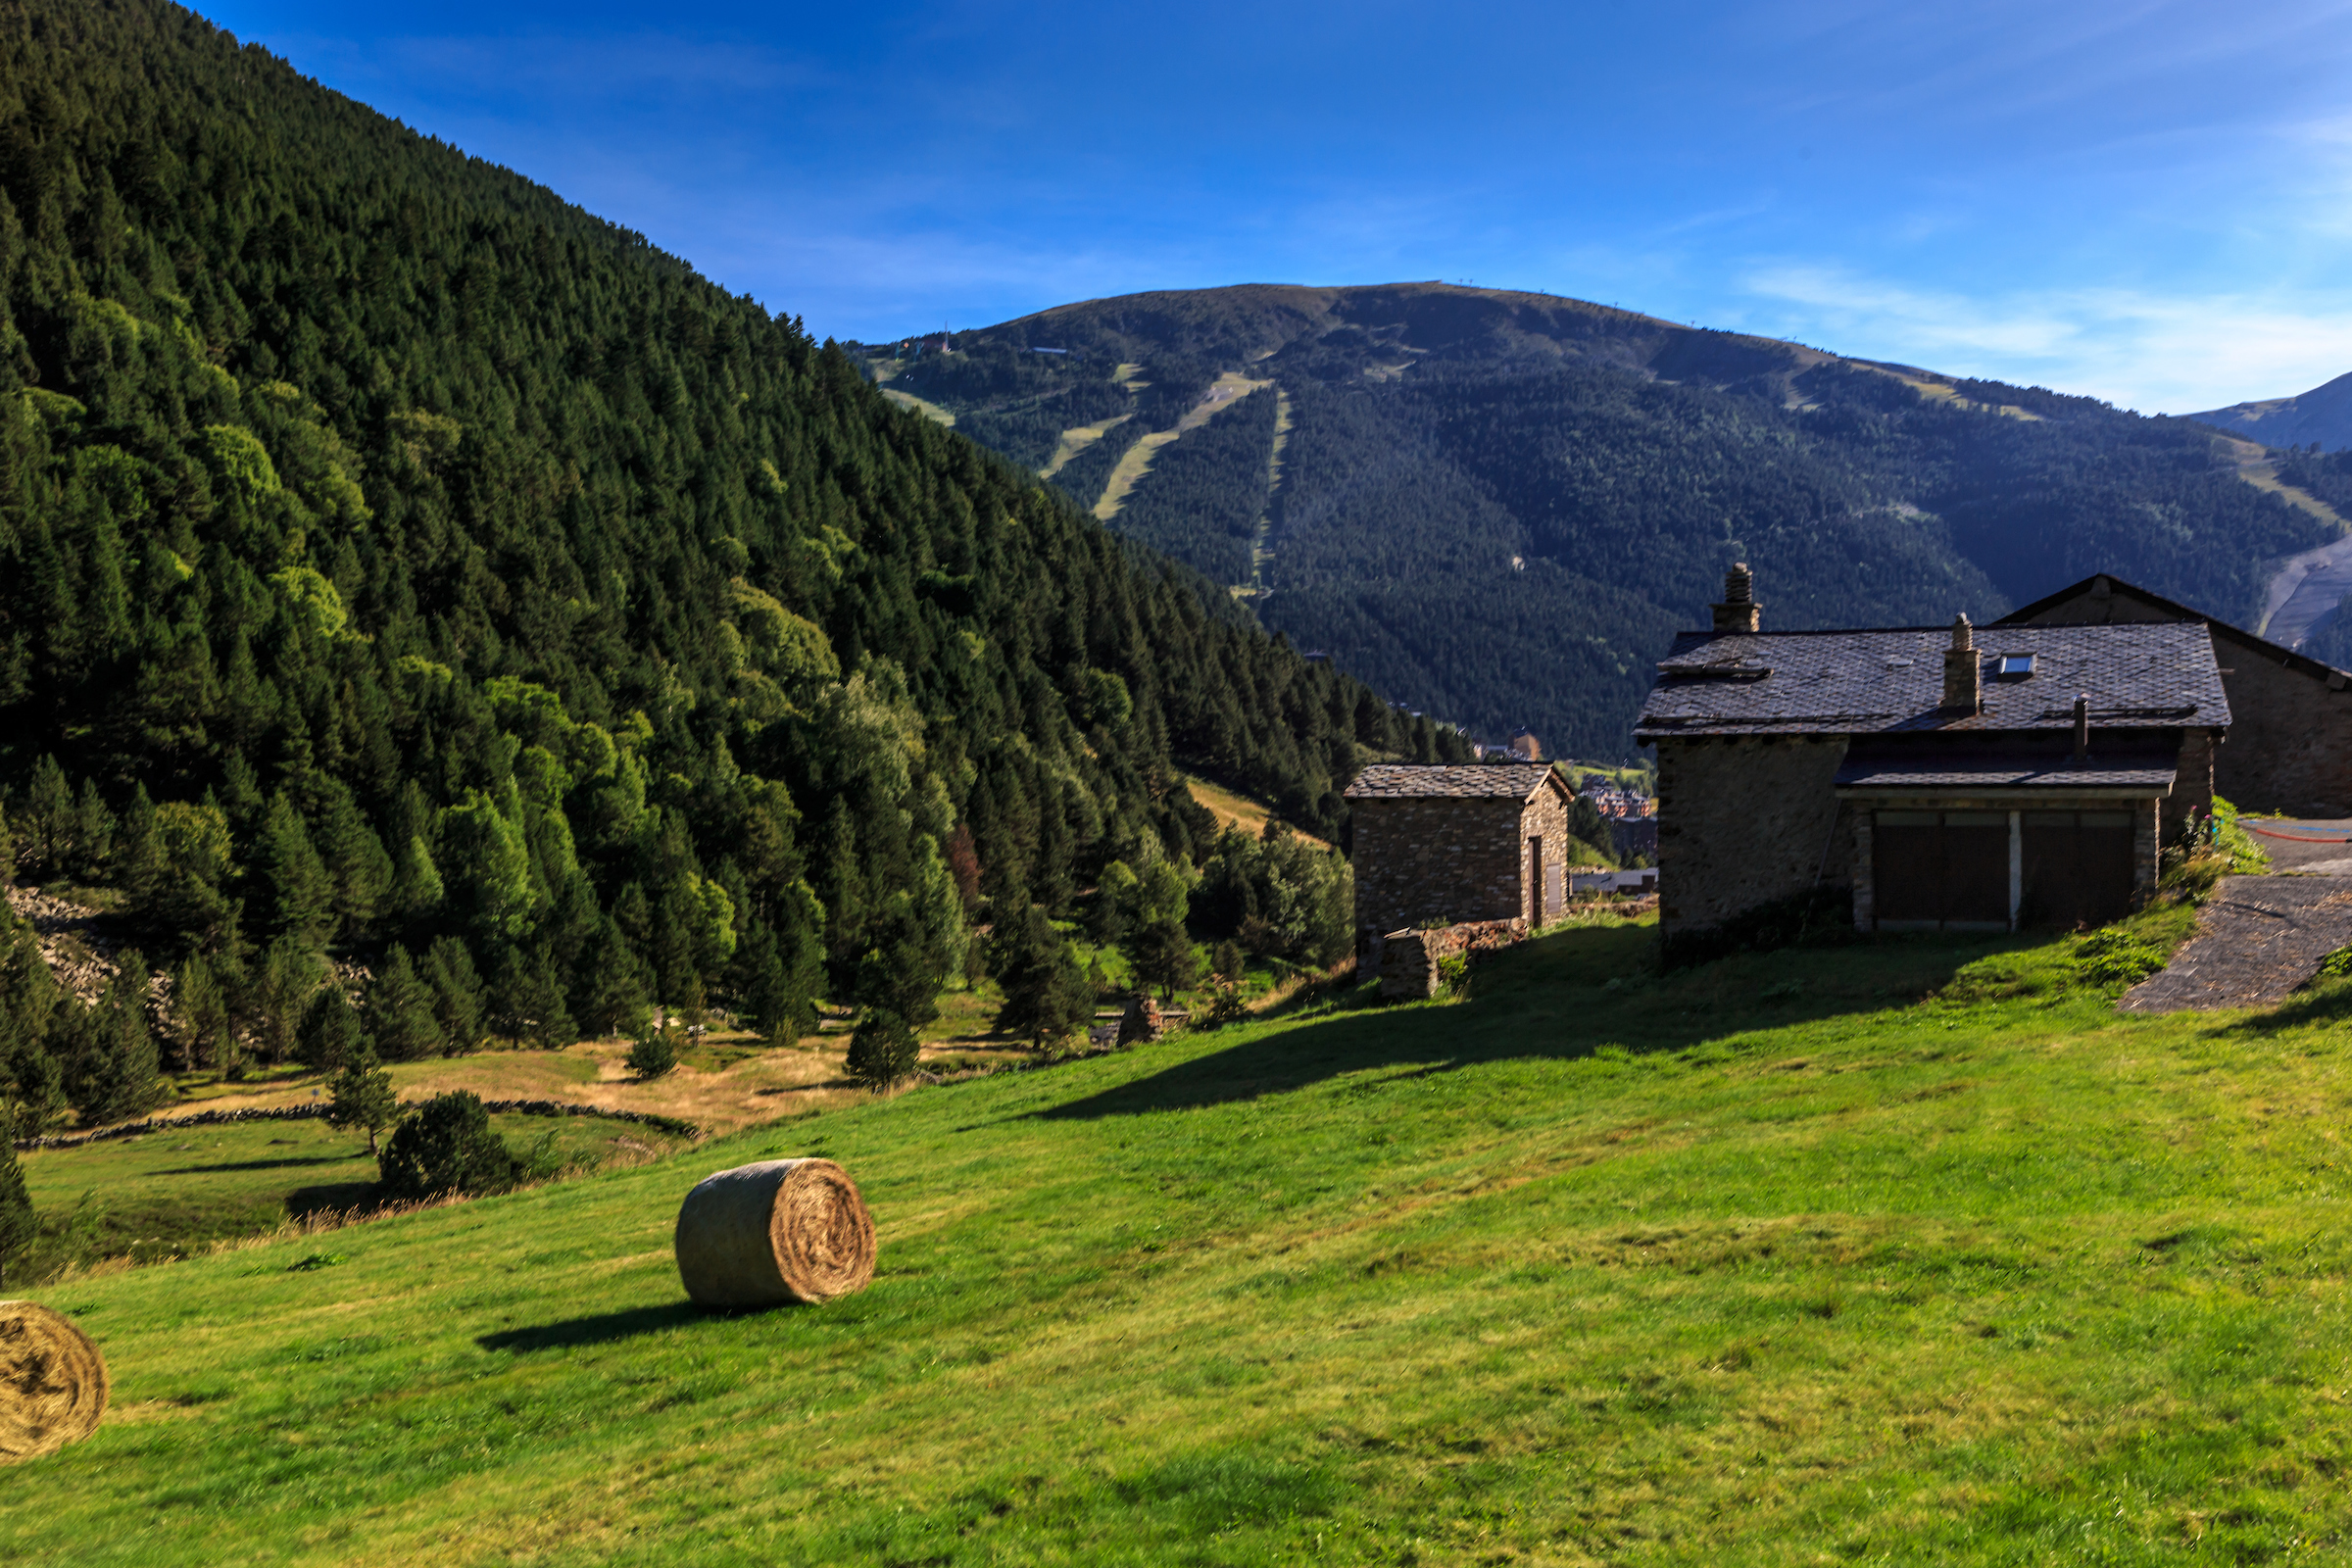 3 ways to enjoy Andorra in spring